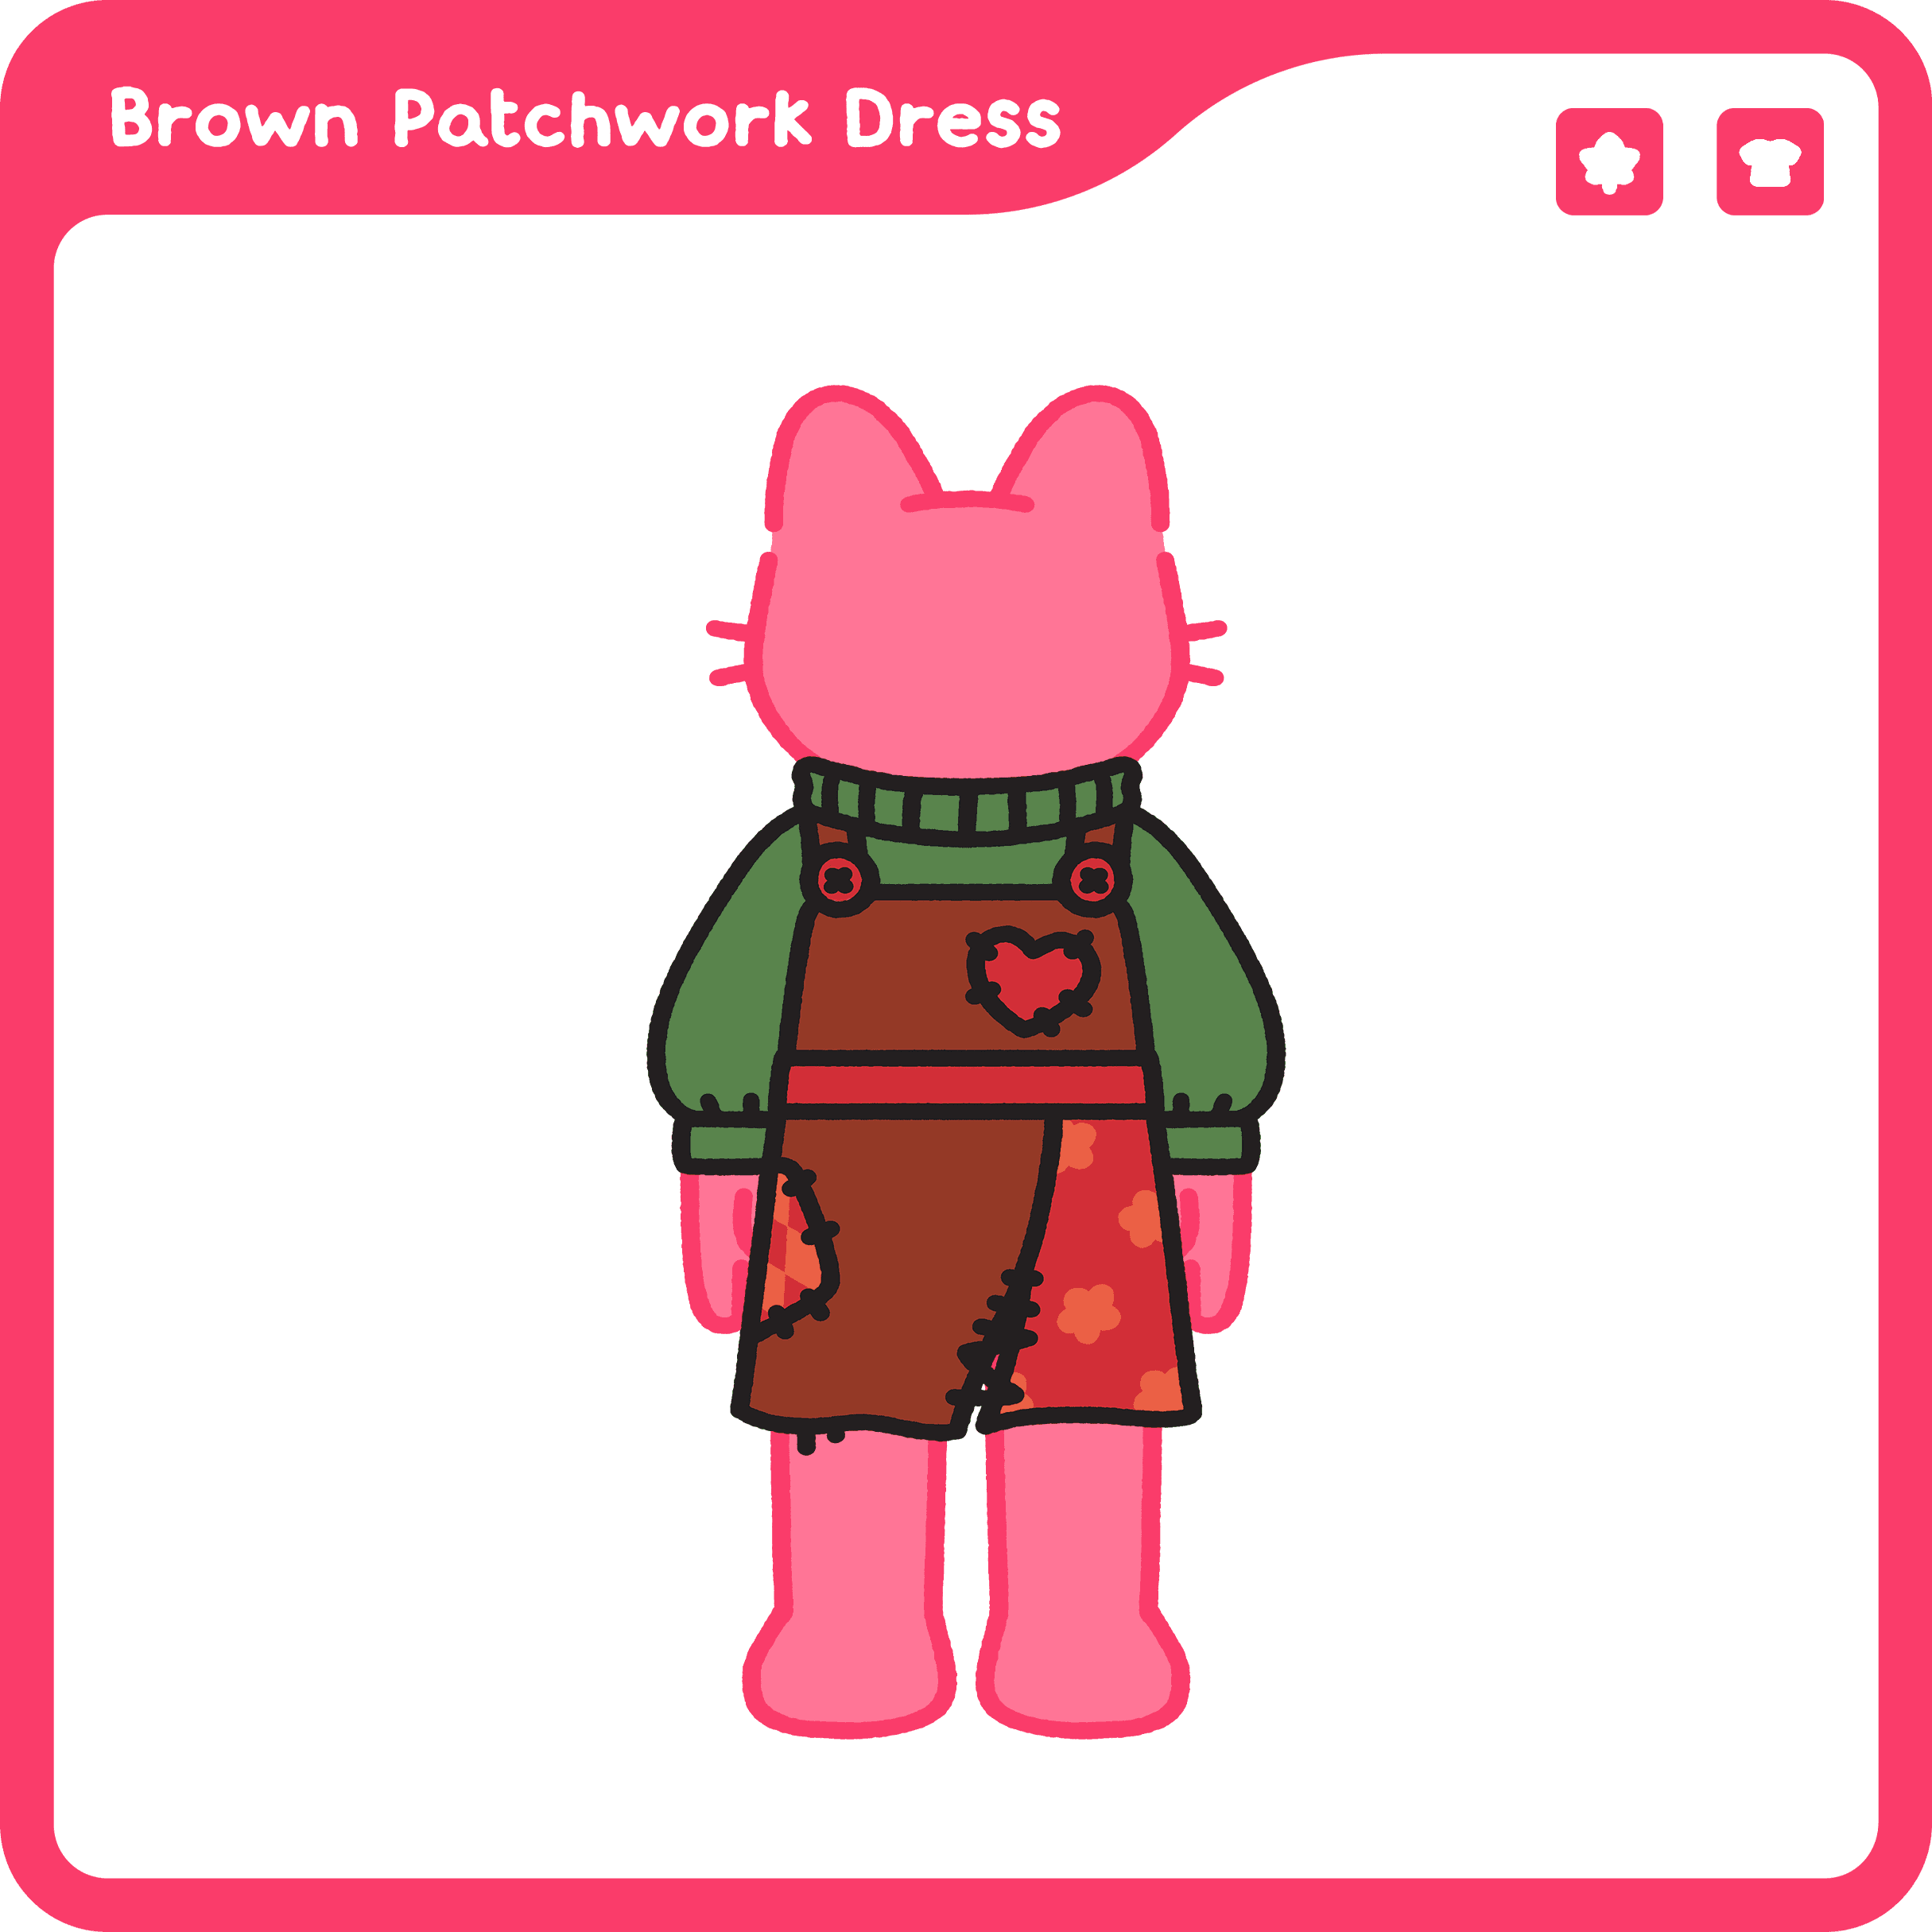 Brown Patchwork Dress